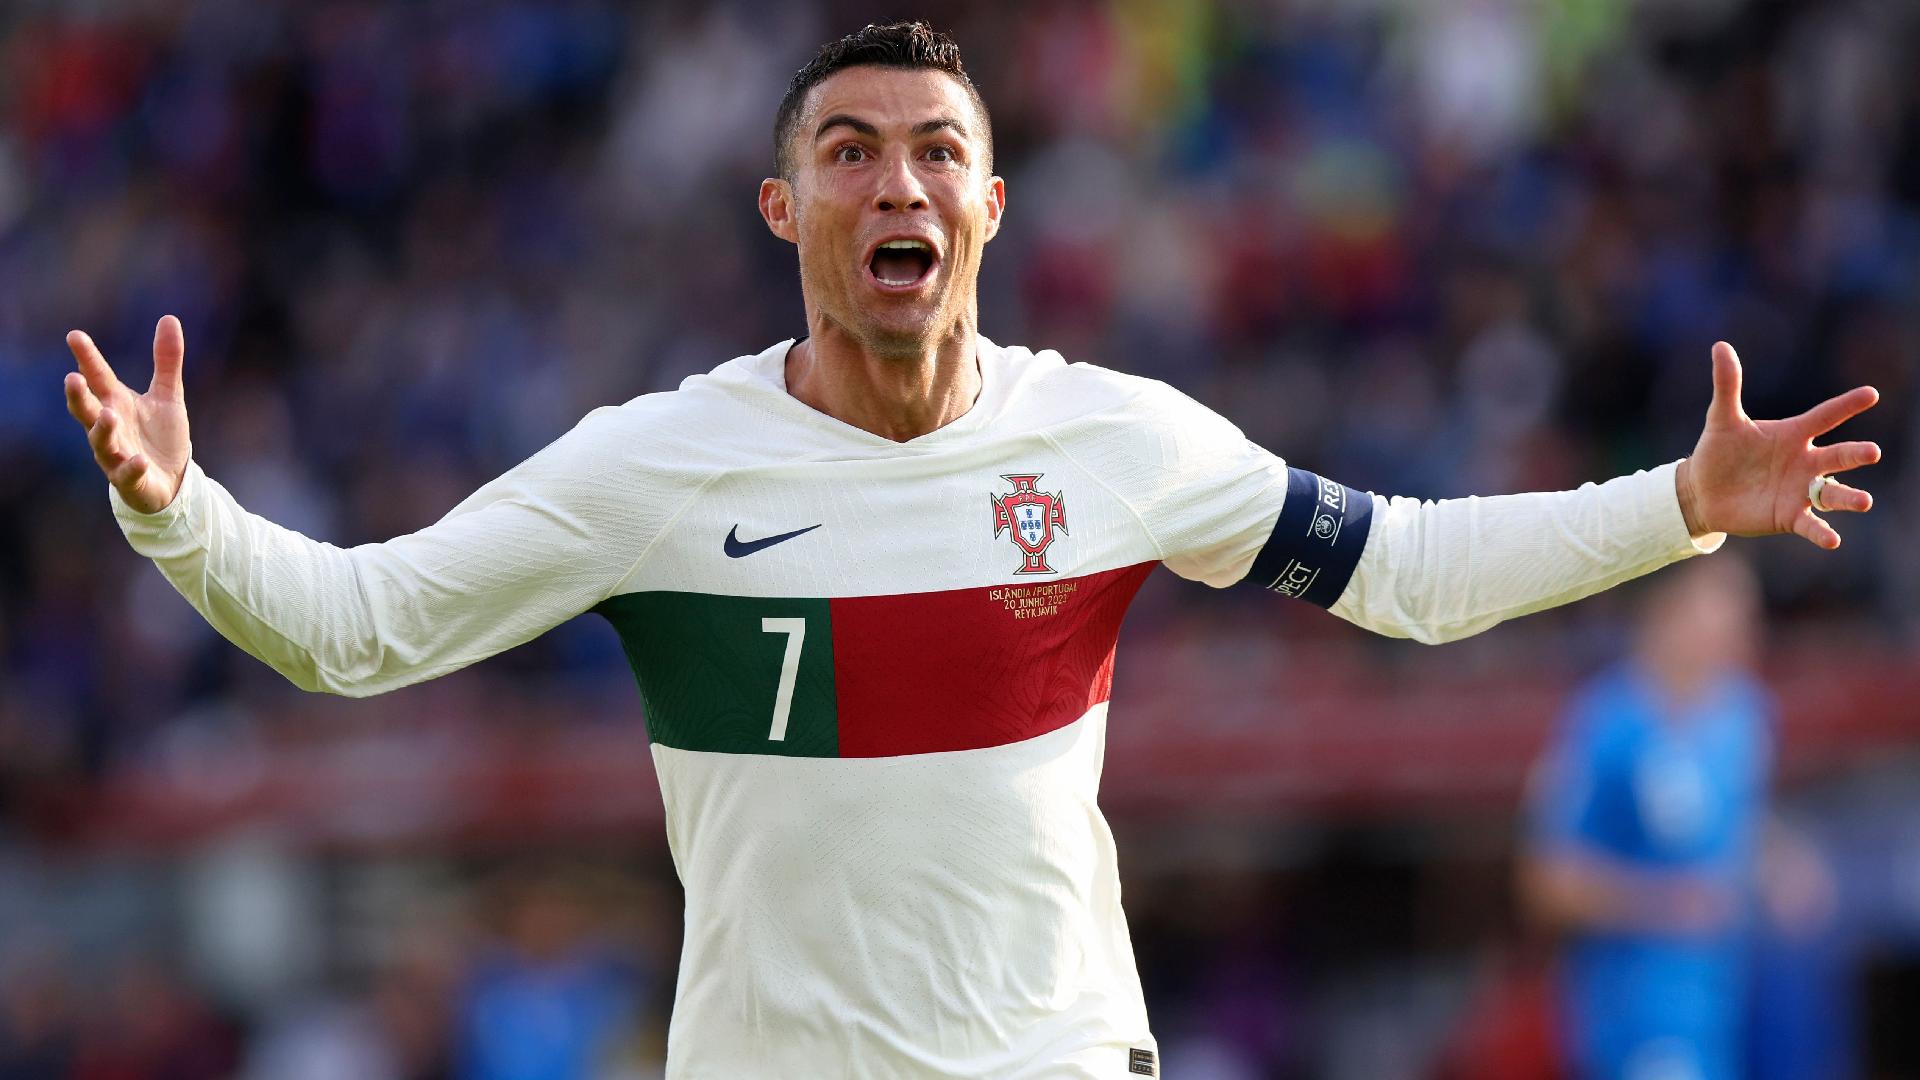 Messi-Ronaldo match in Saudi Arabia to air on beIN Sports Xtra